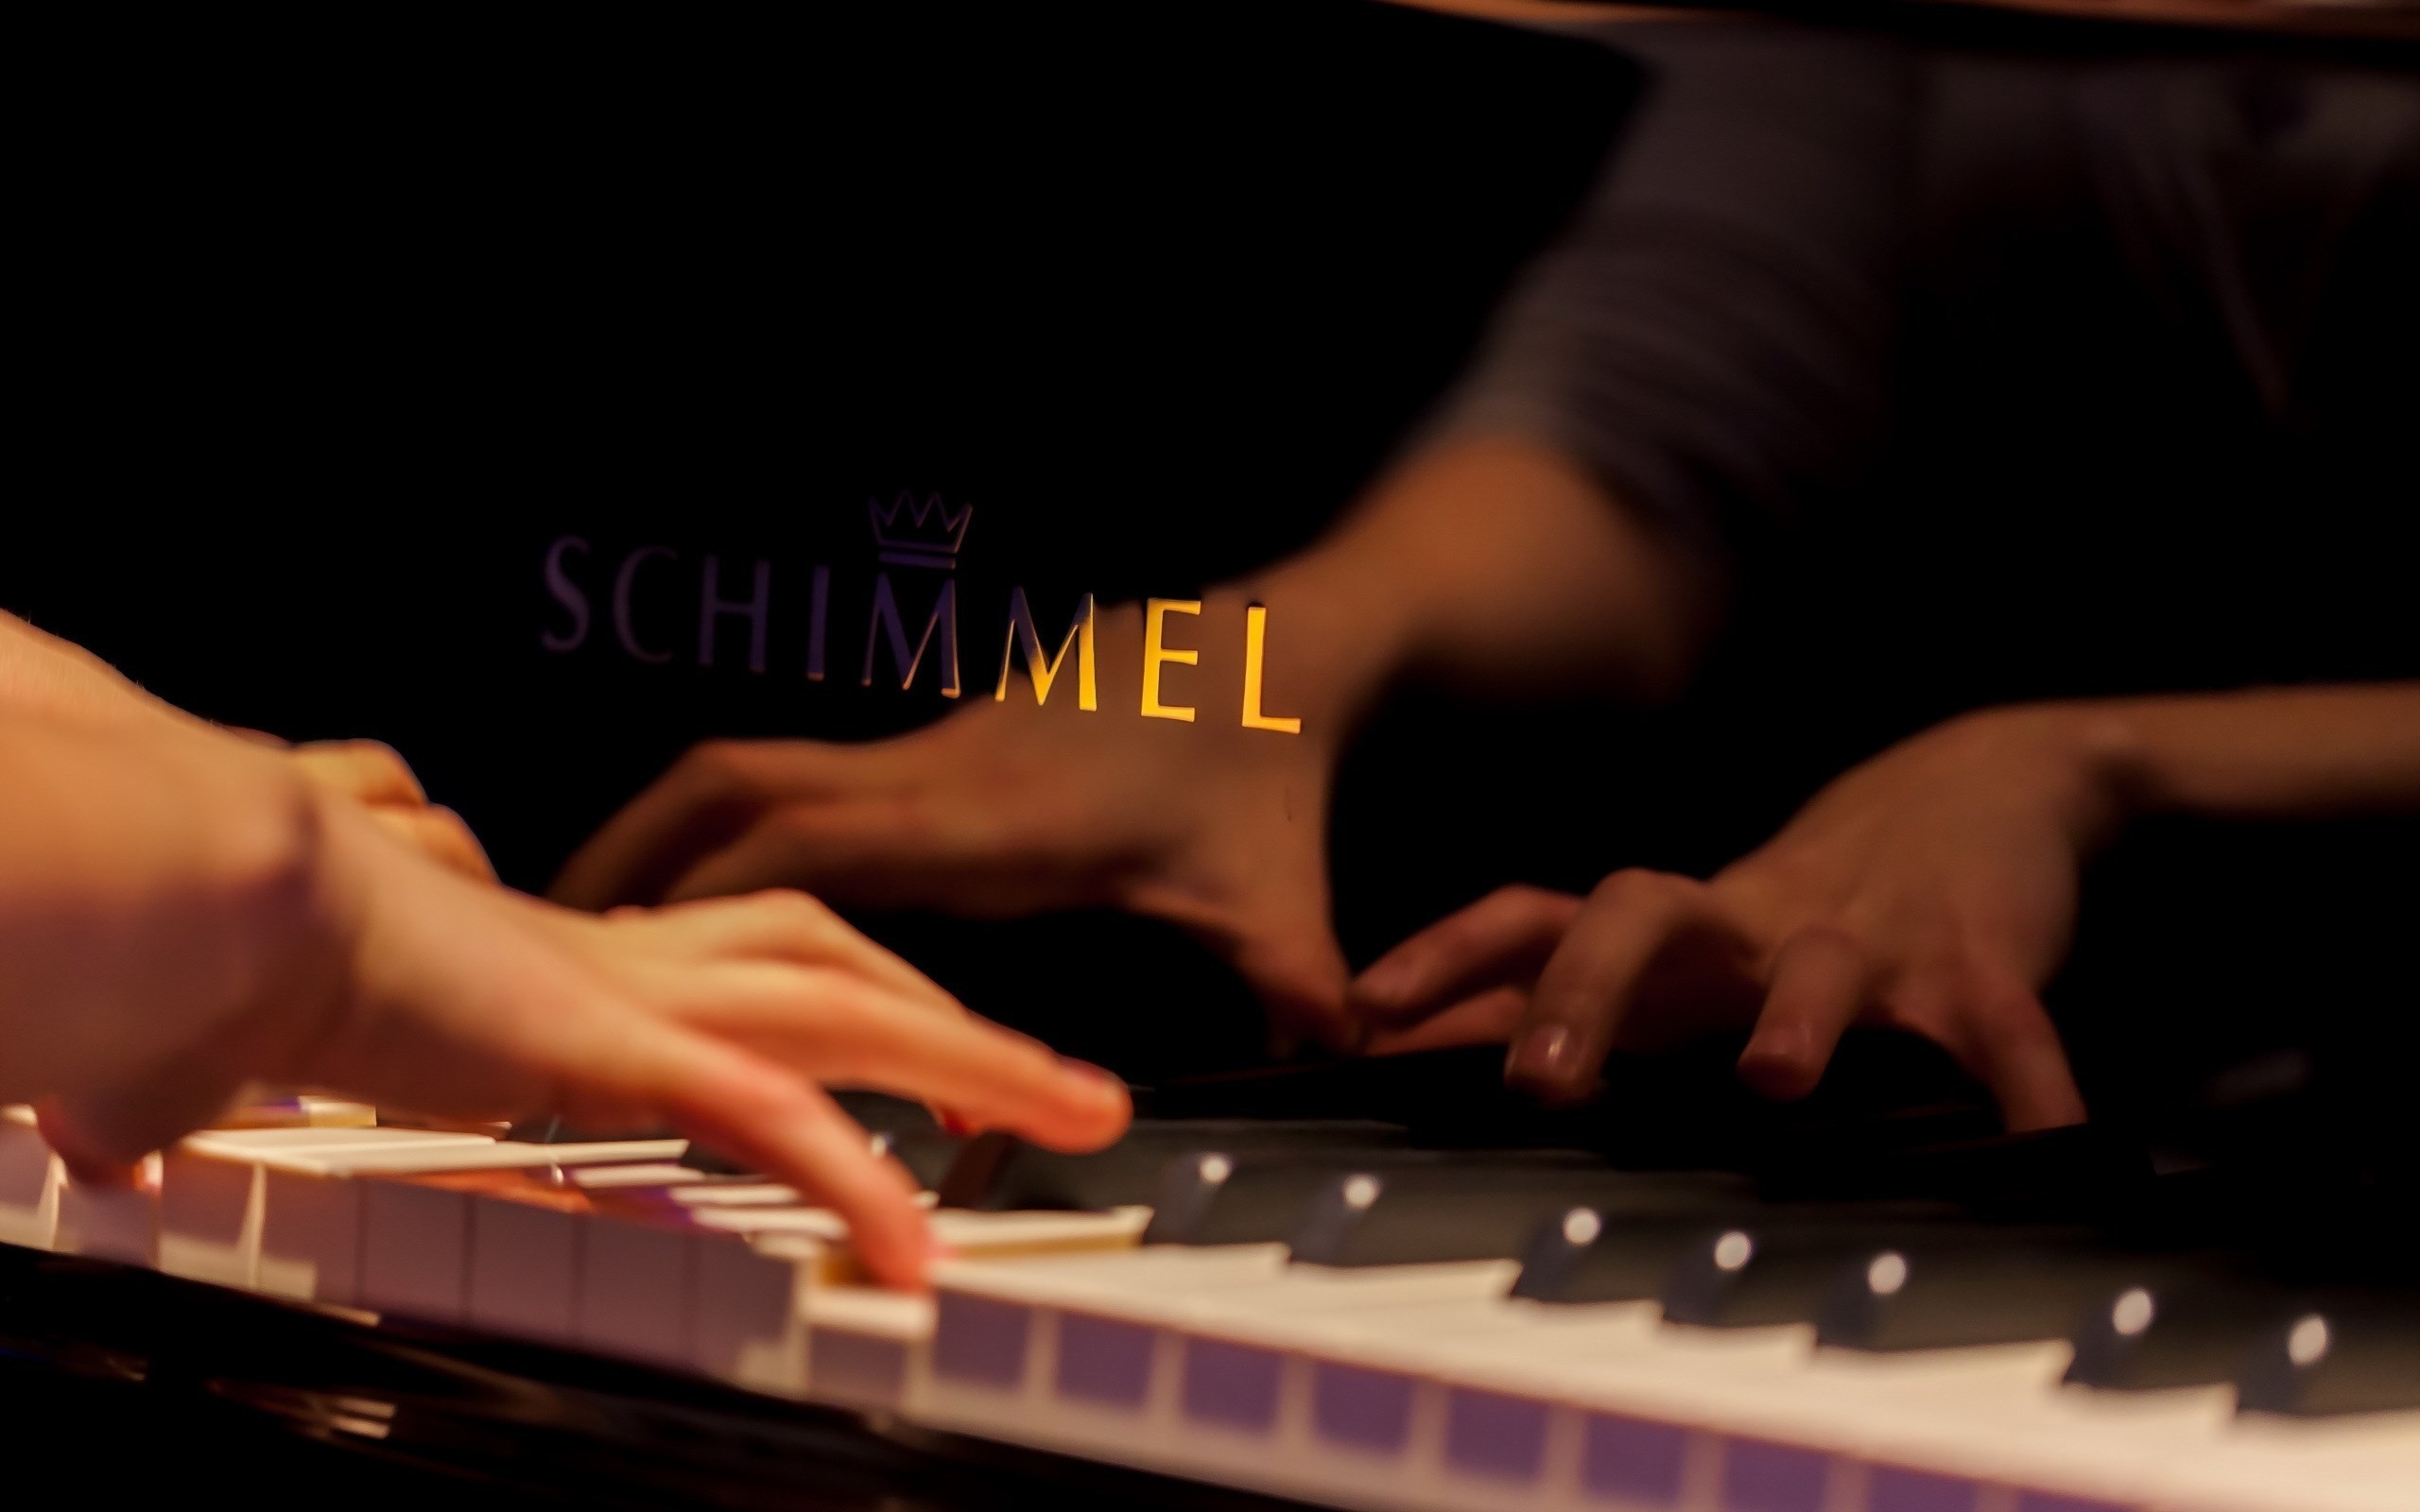 Schimmel Piano for 2560 x 1600 widescreen resolution